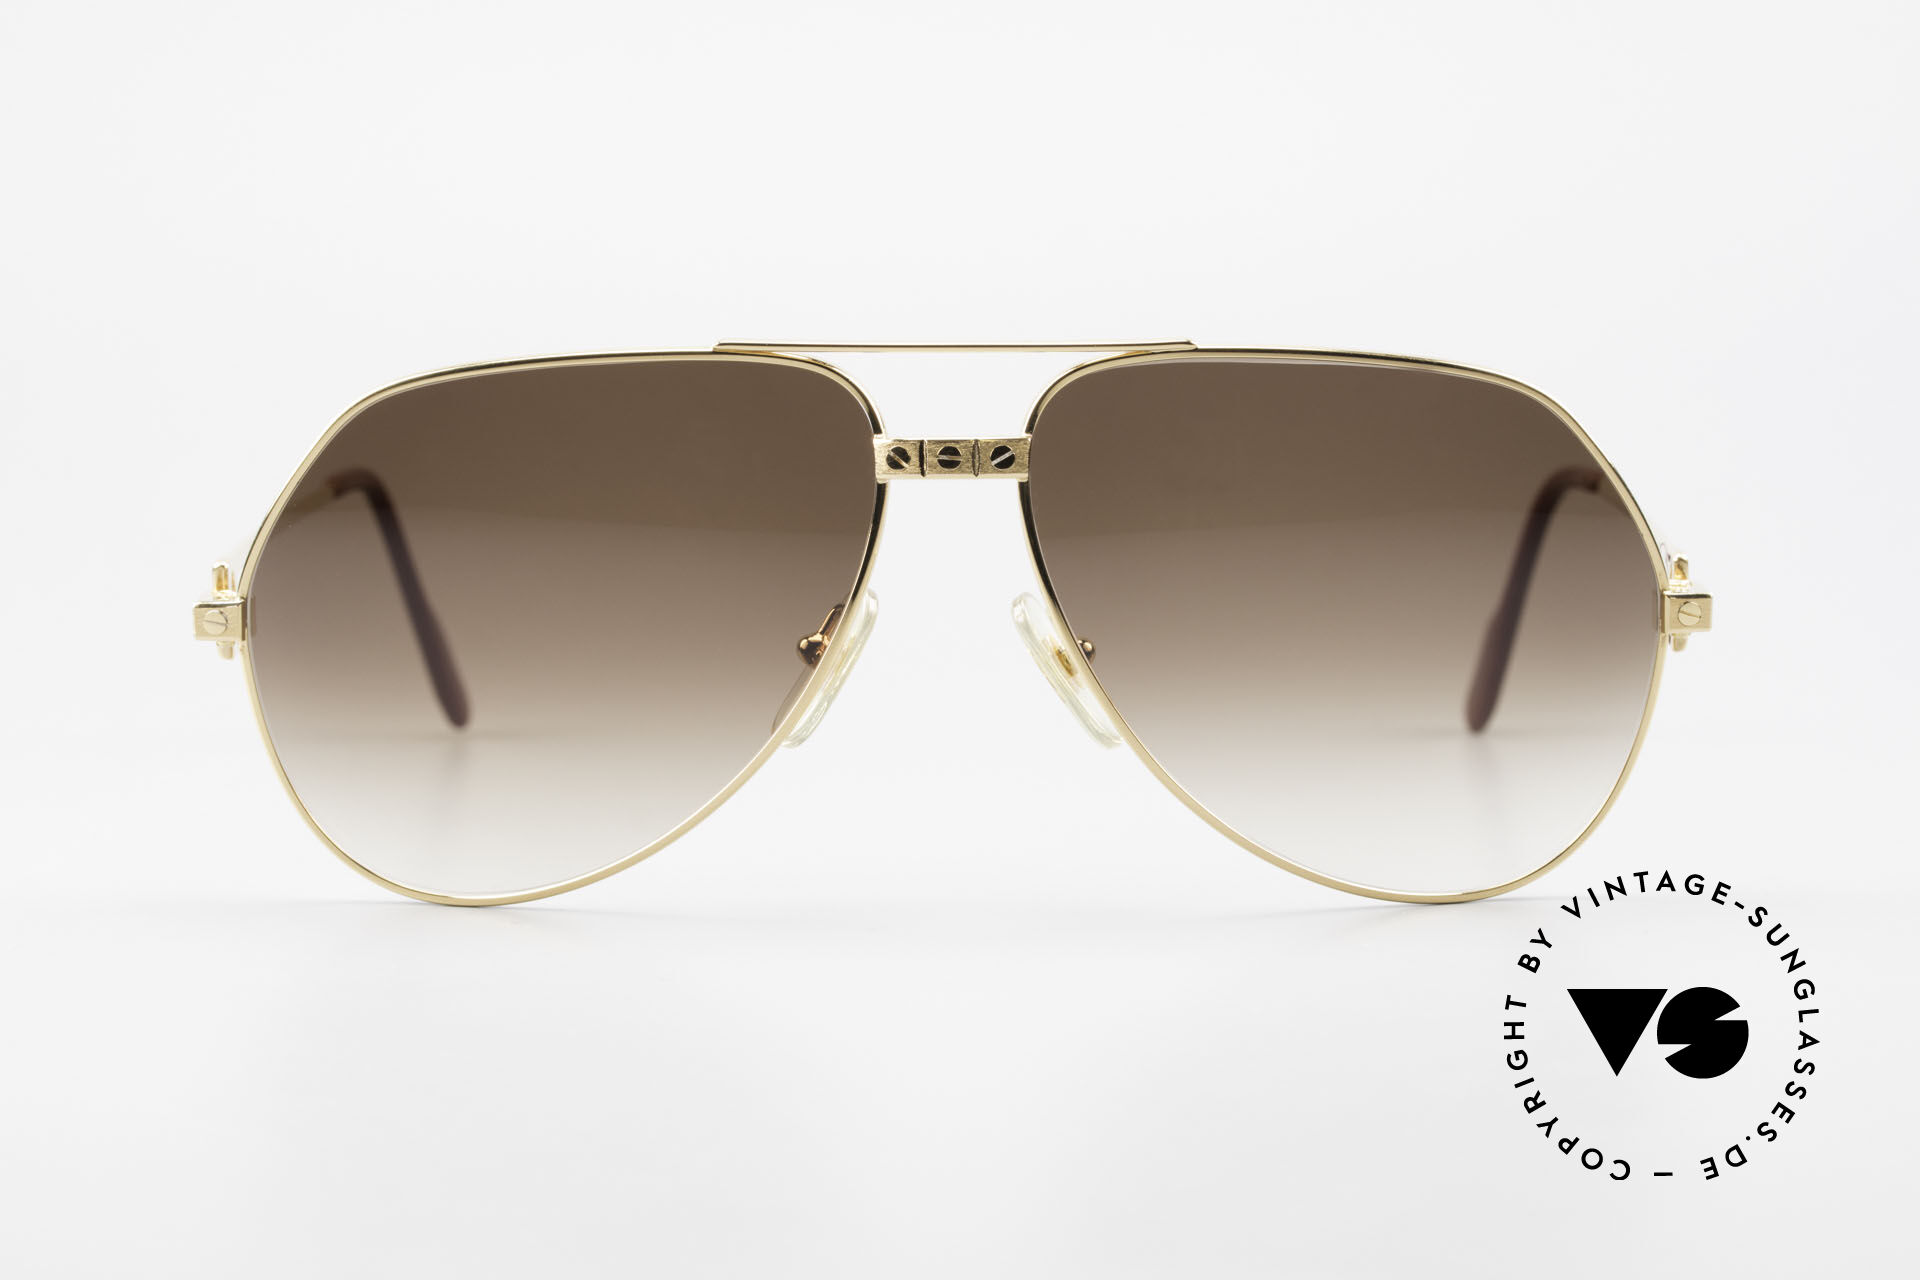 Sunglasses Cartier Vendome Santos - L Special Edition Fully Gold